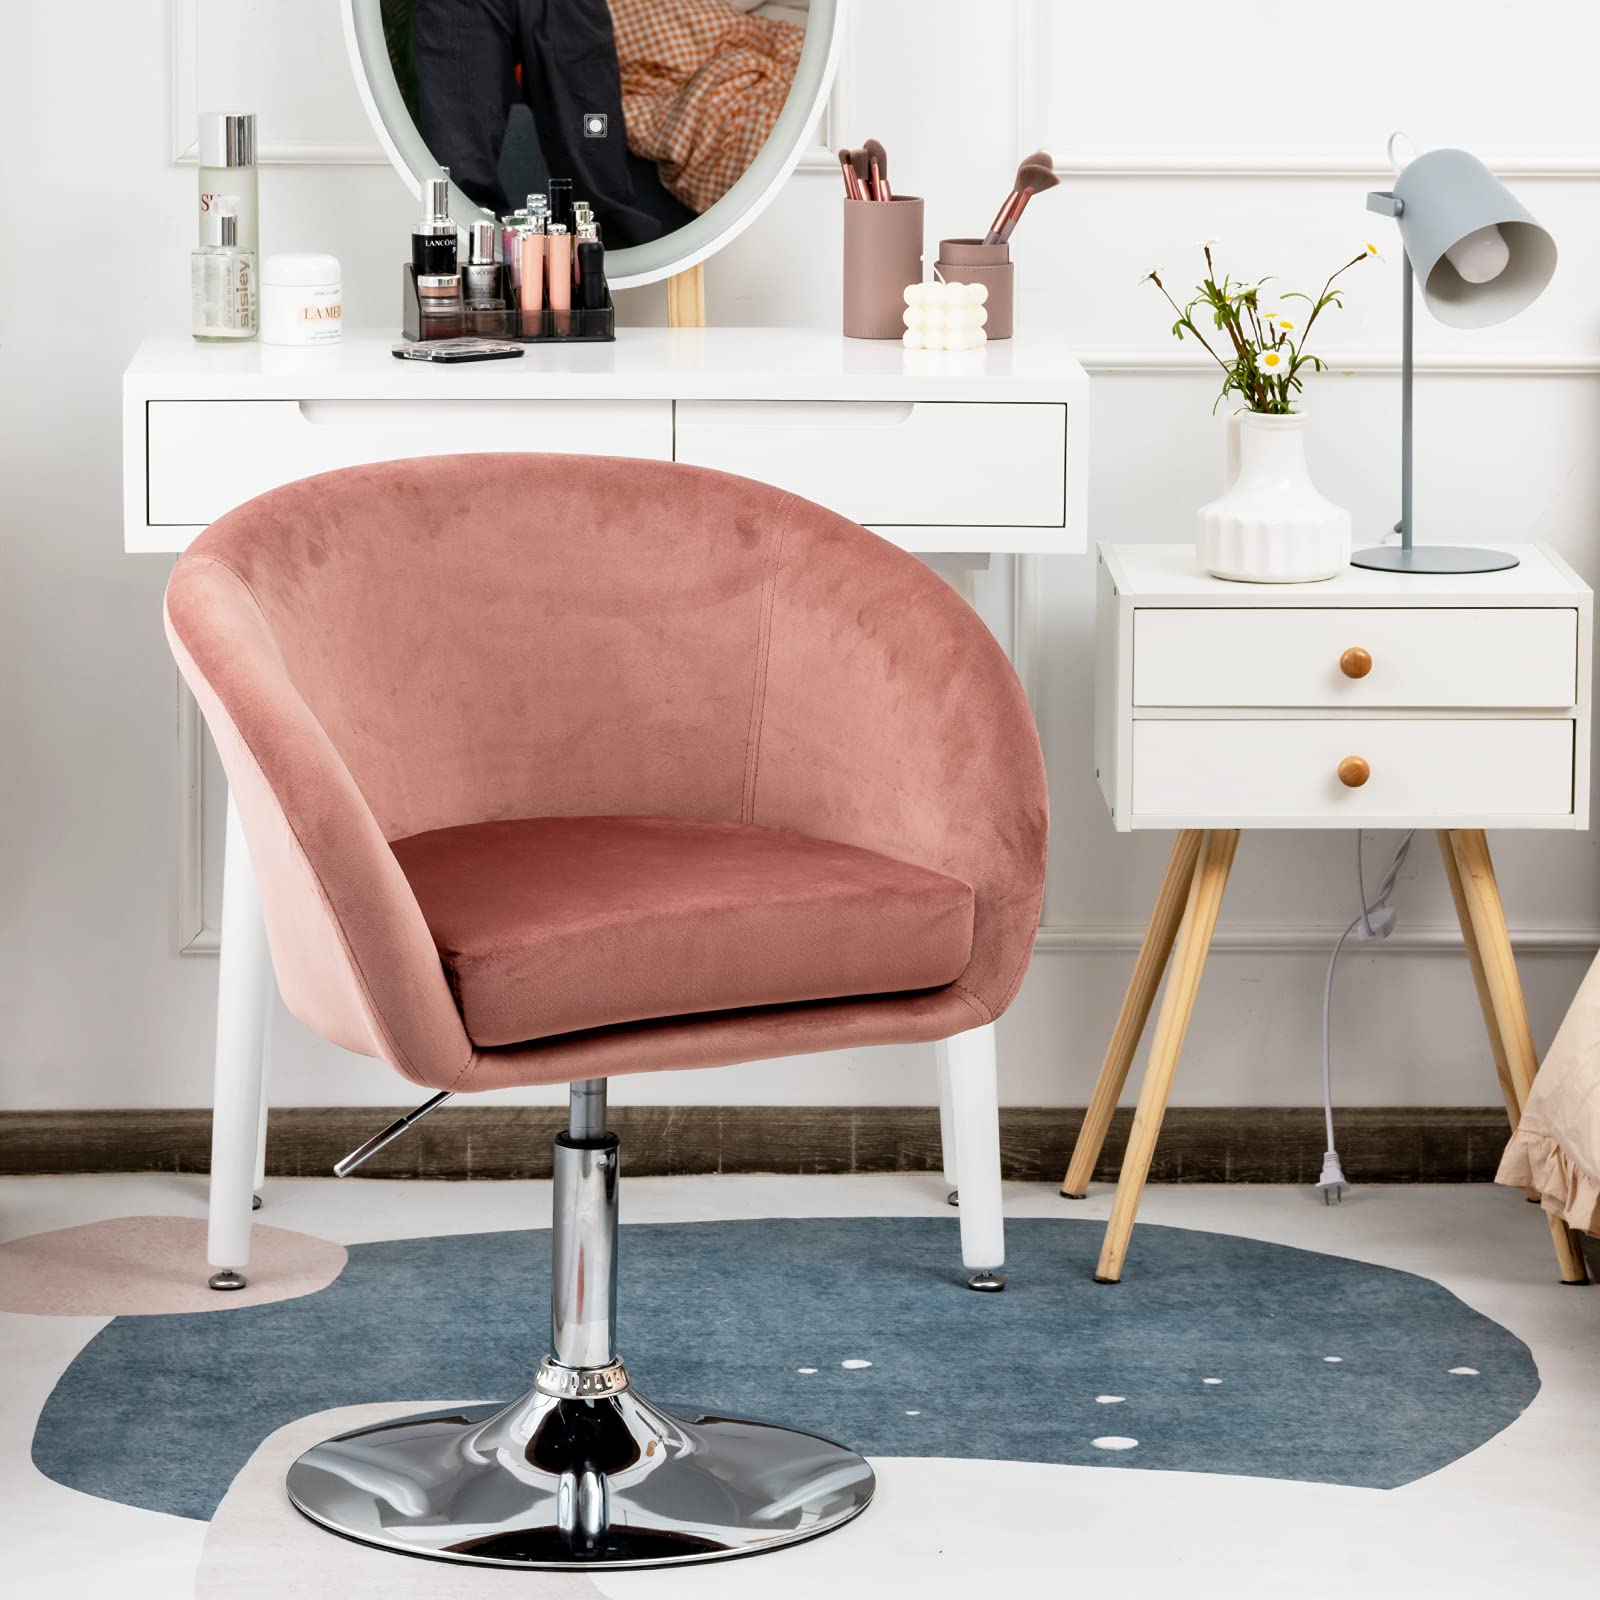 Height Adjustable Modern Velvet Makeup Chair with Chrome Frame